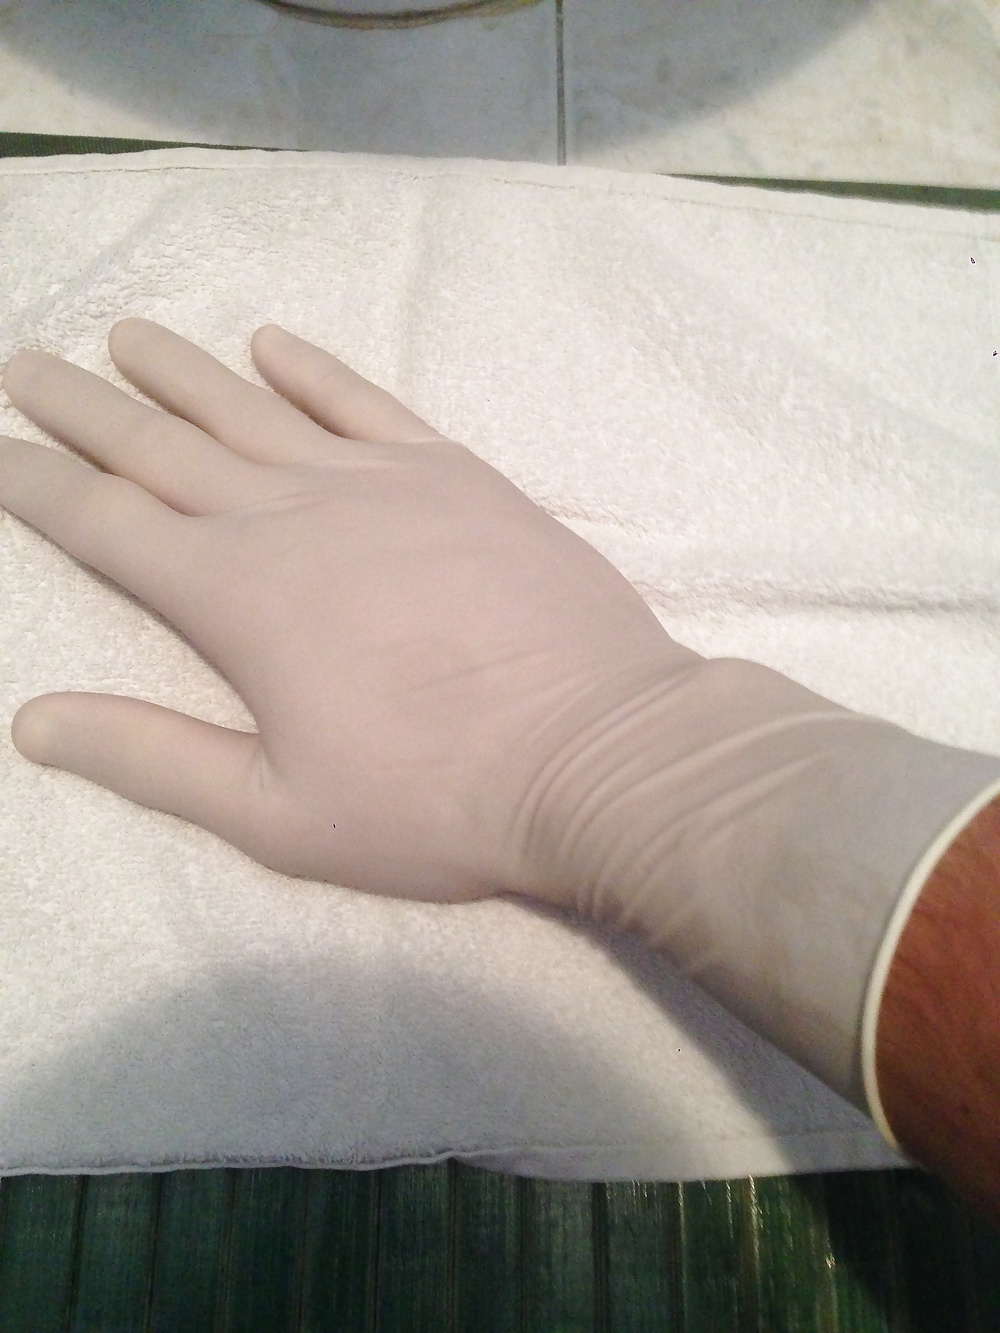 Nurse Gloves Fisting